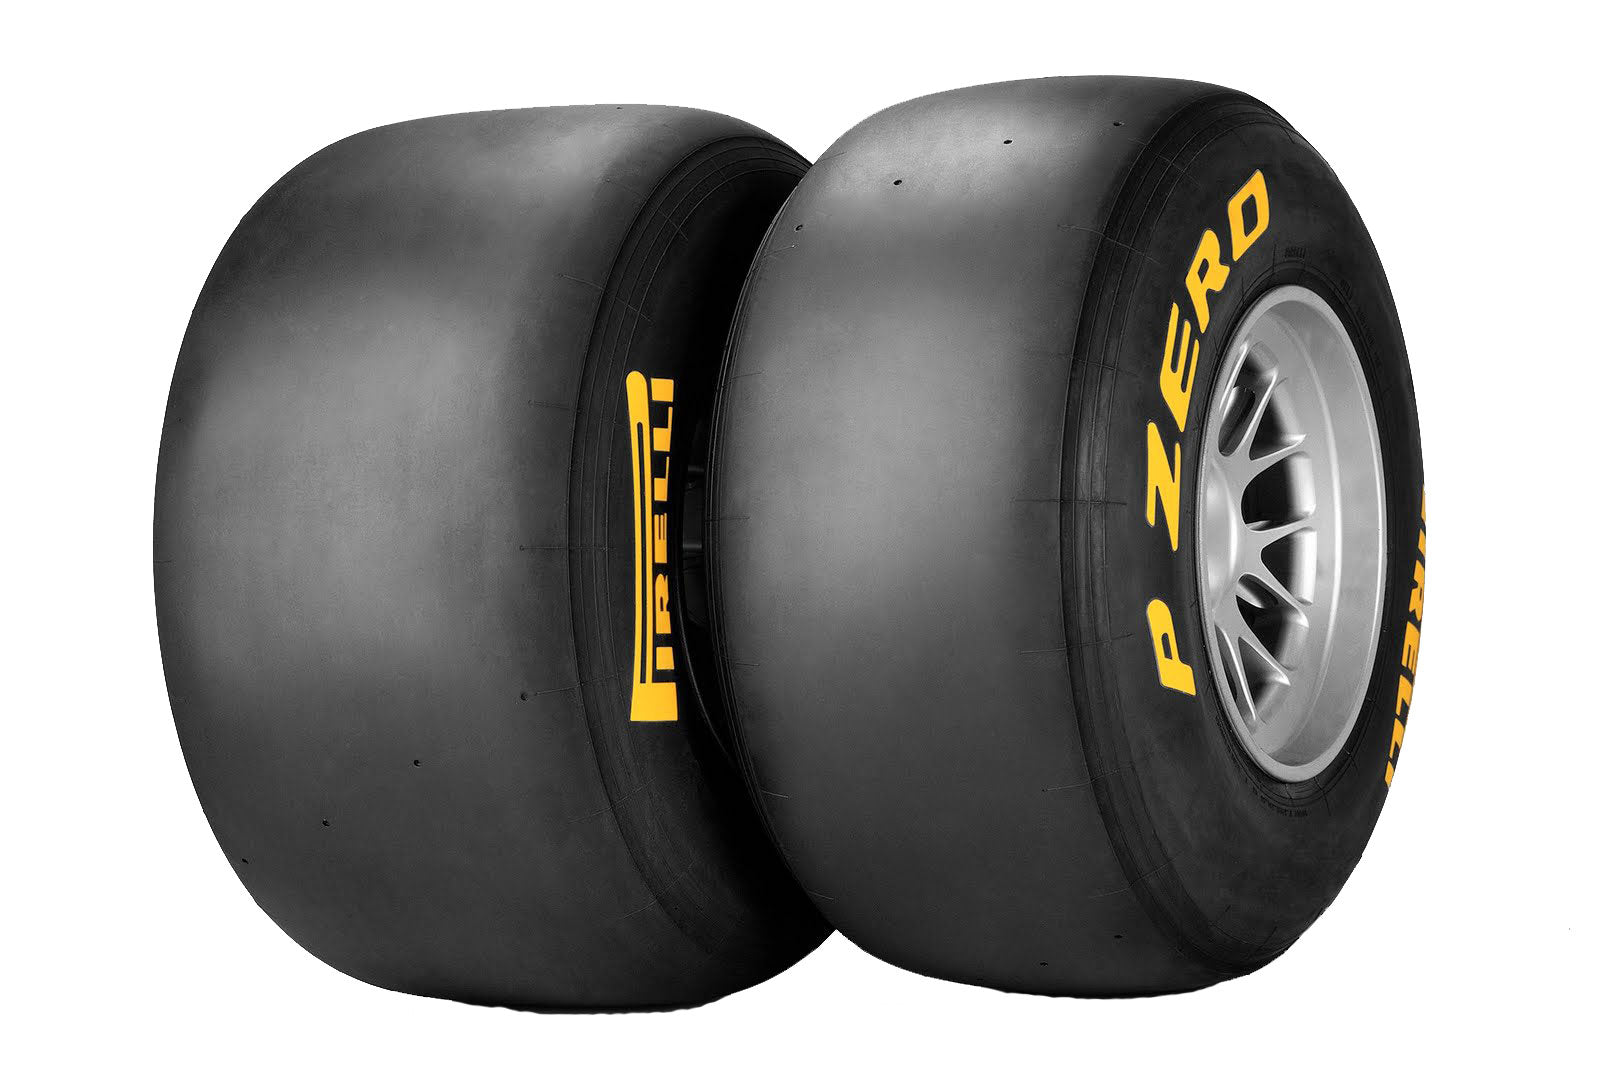 Slick-racing-tires.jpg